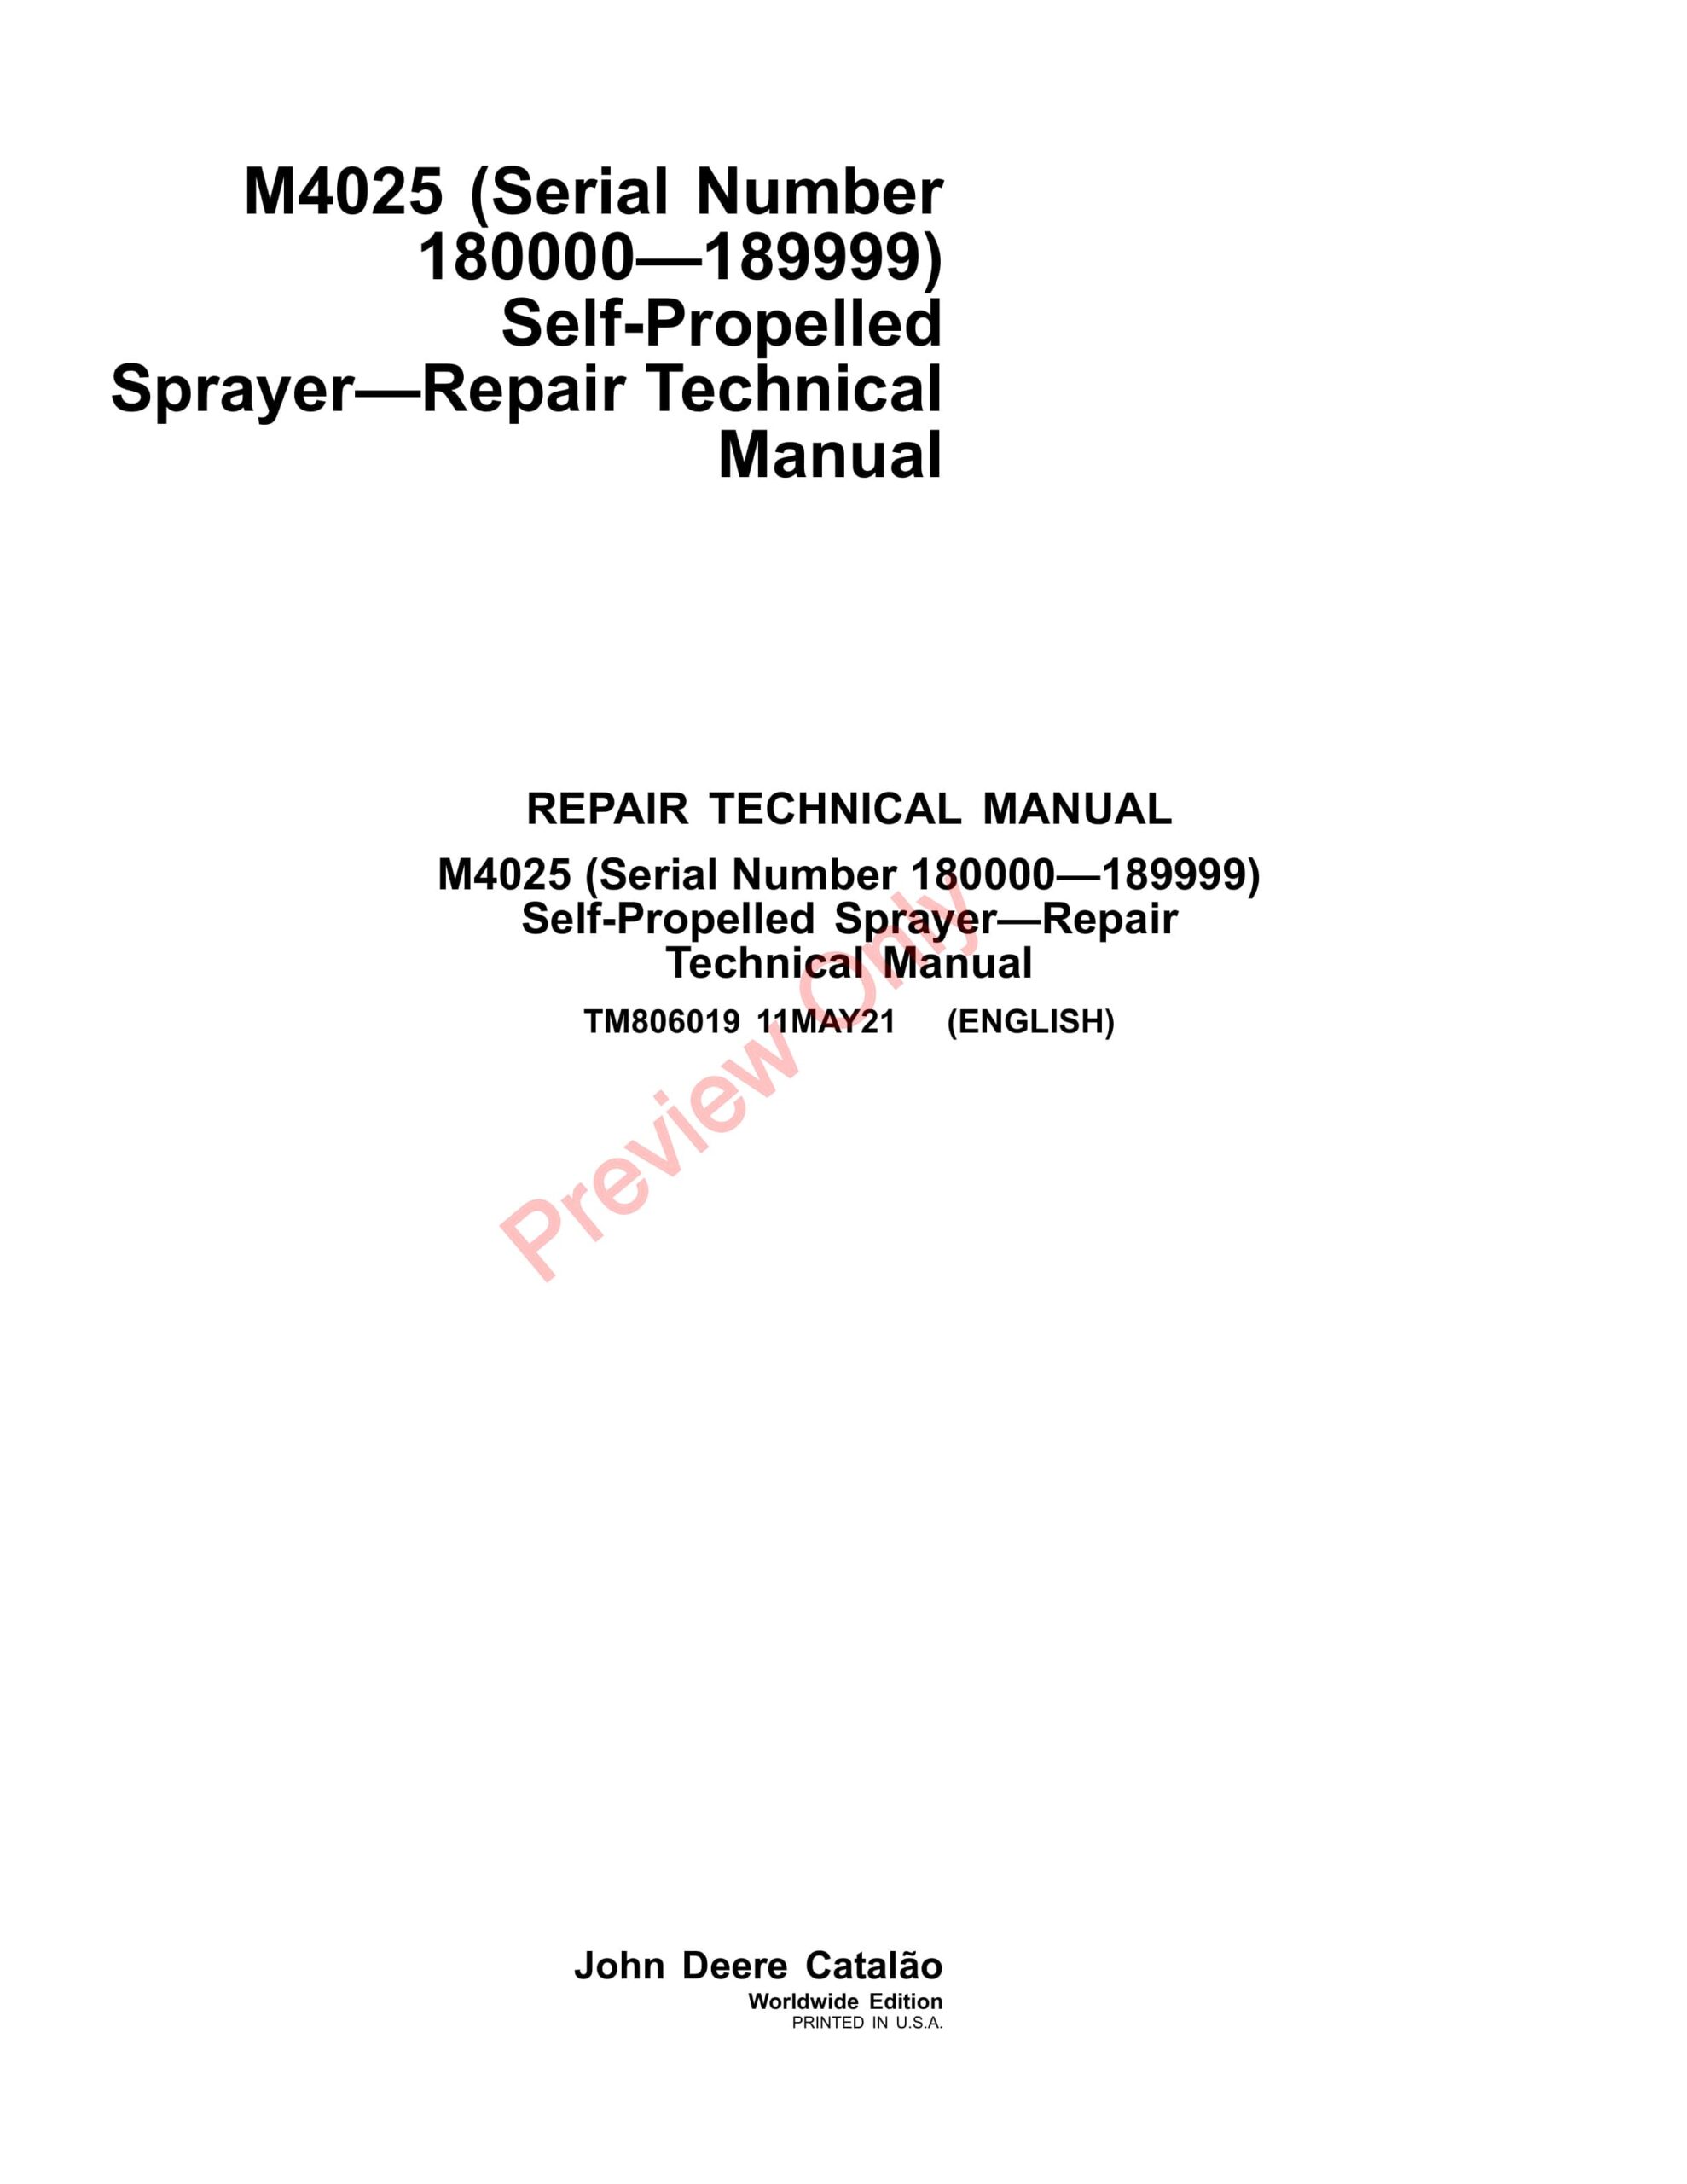 John Deere M4025 Self-Propelled Sprayer, (180000-189999), Repair Technical Manual TM806019 11MAY21-1